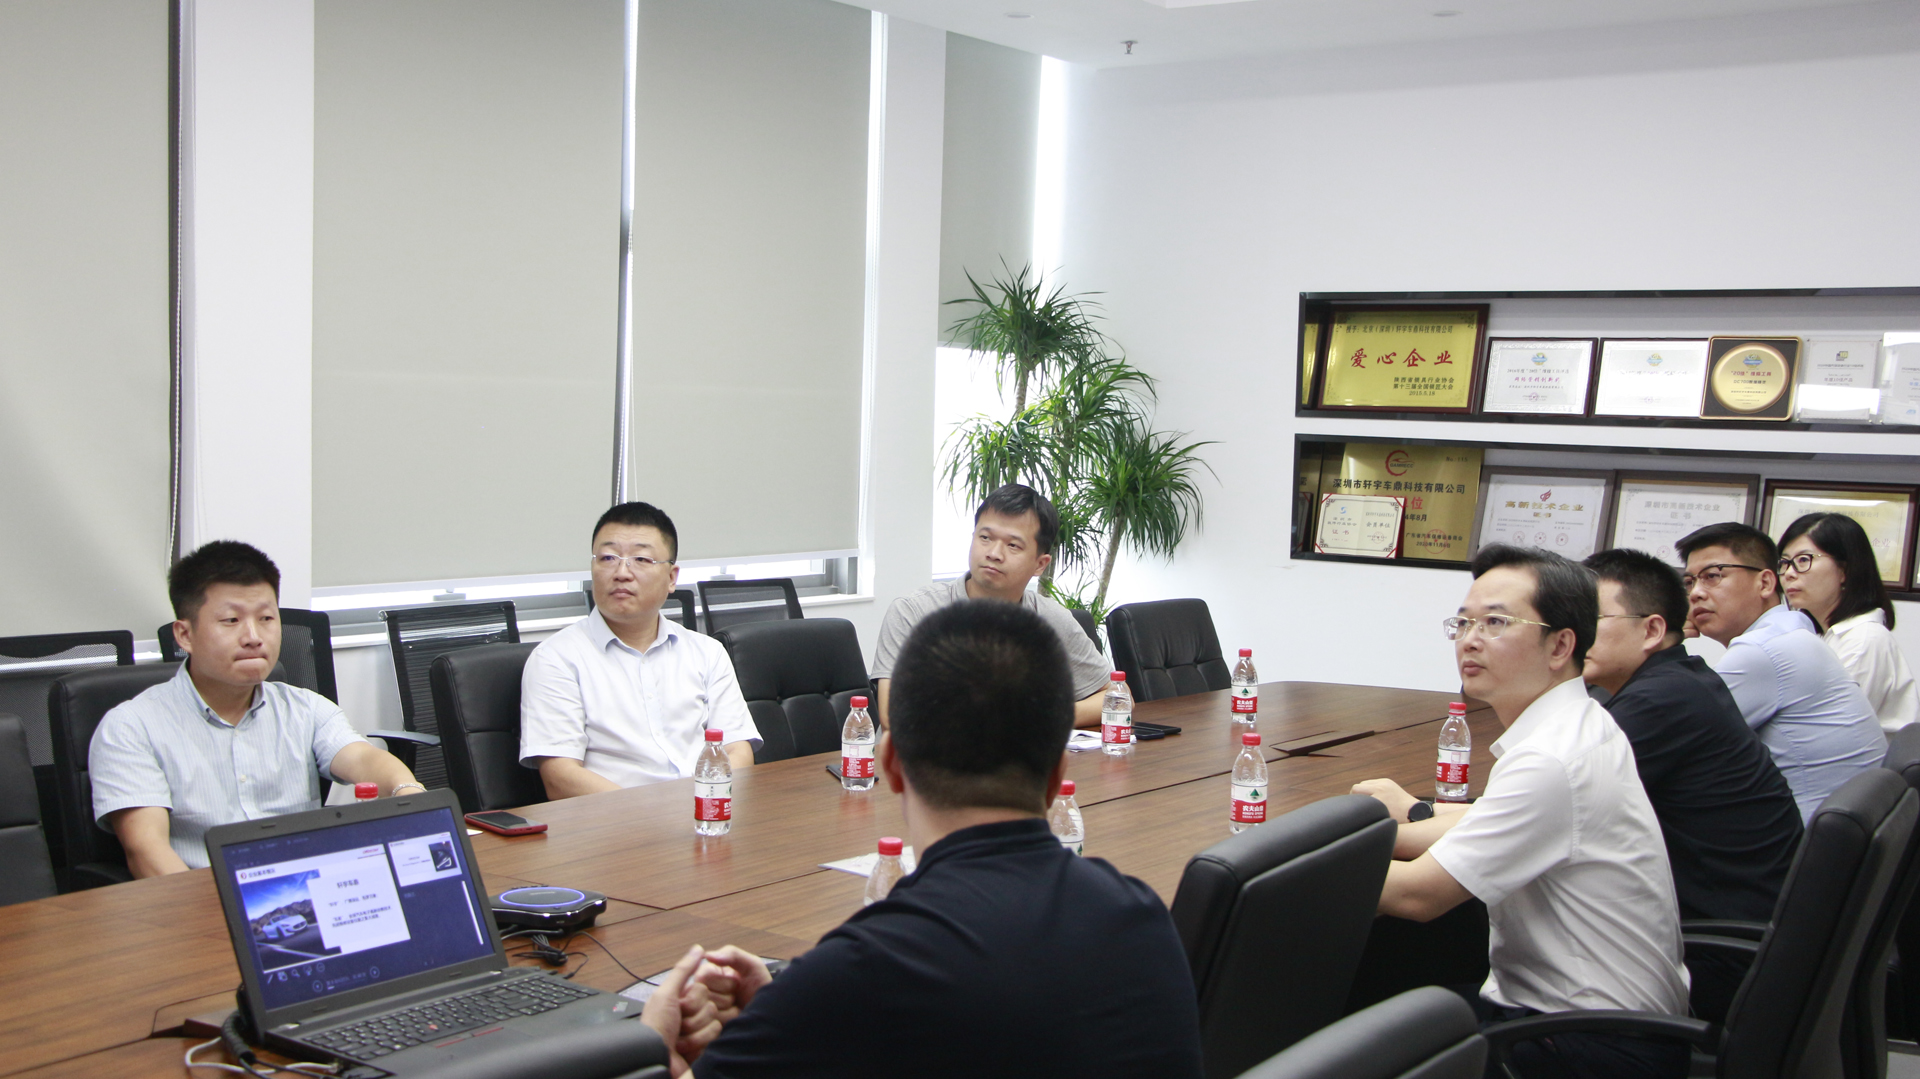 Shiyan Street Office leaders visited OBDSTAR